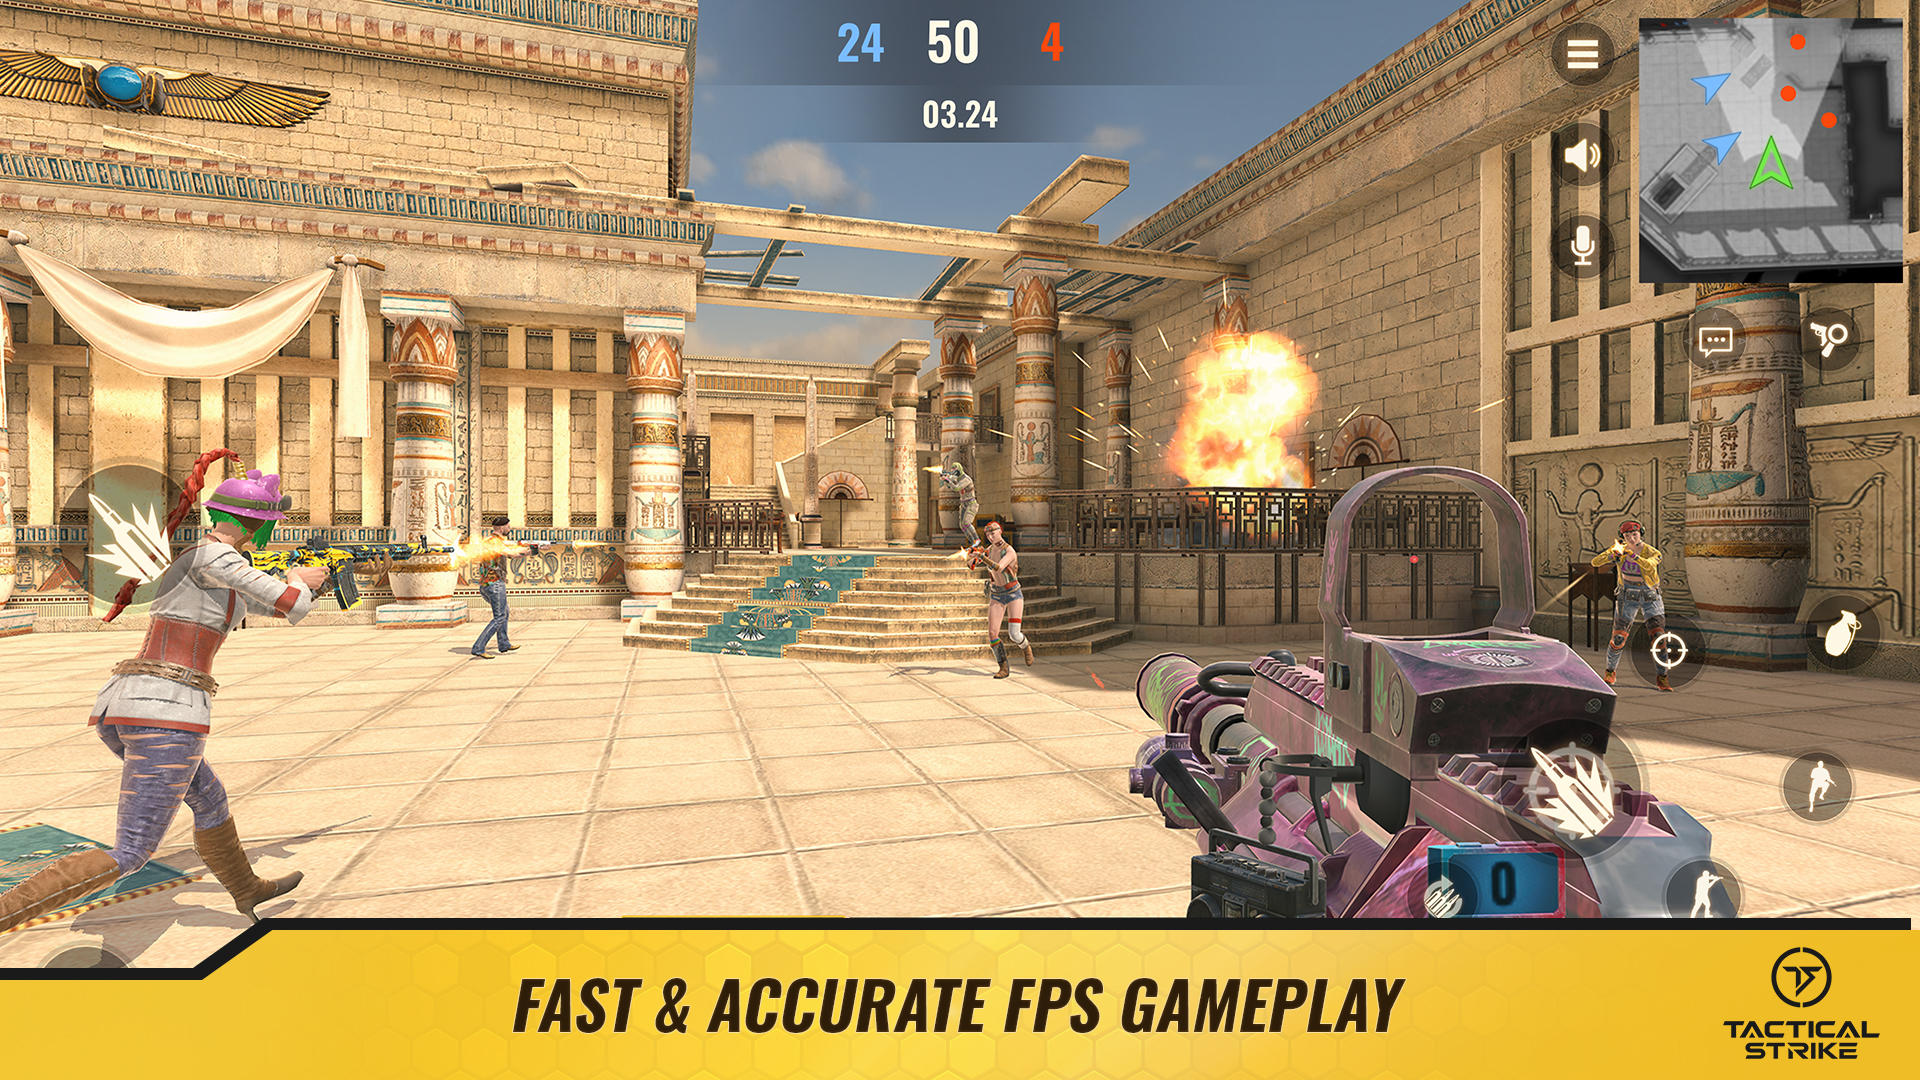 Screenshot 1 of Tactical Strike: 3D онлайн-шутер от первого лица 